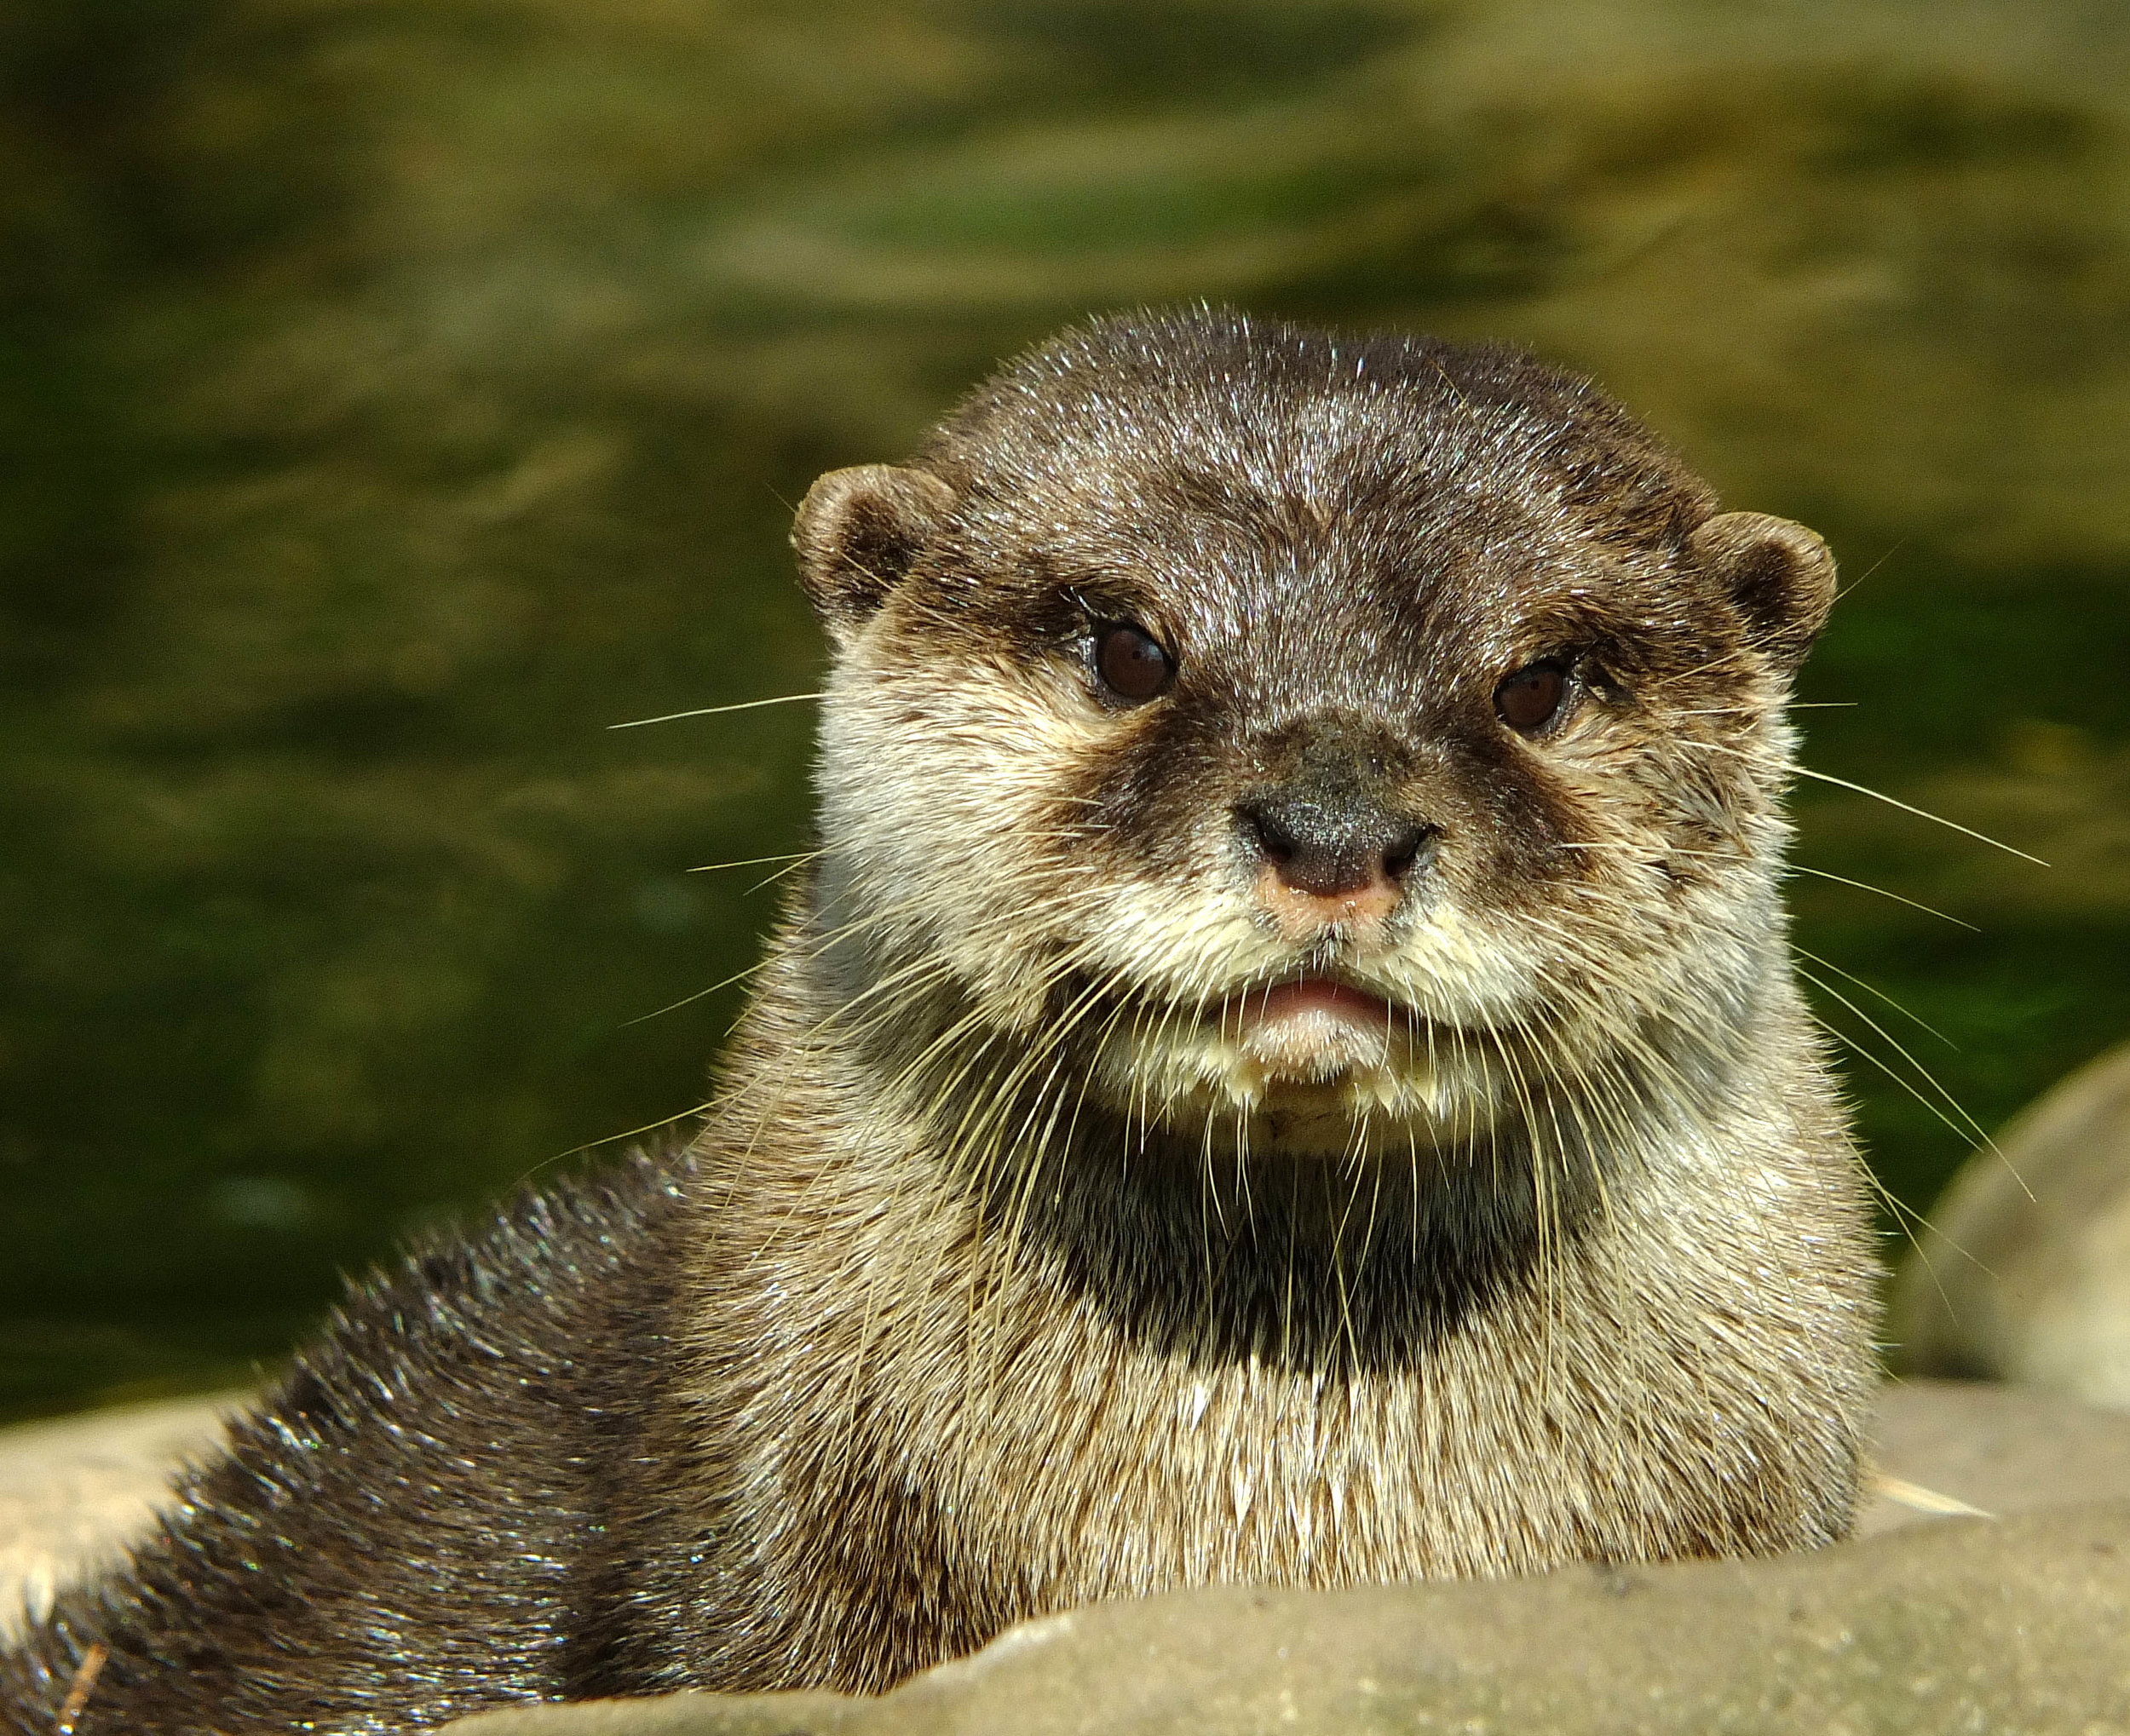 Another Cute Otter Portrait